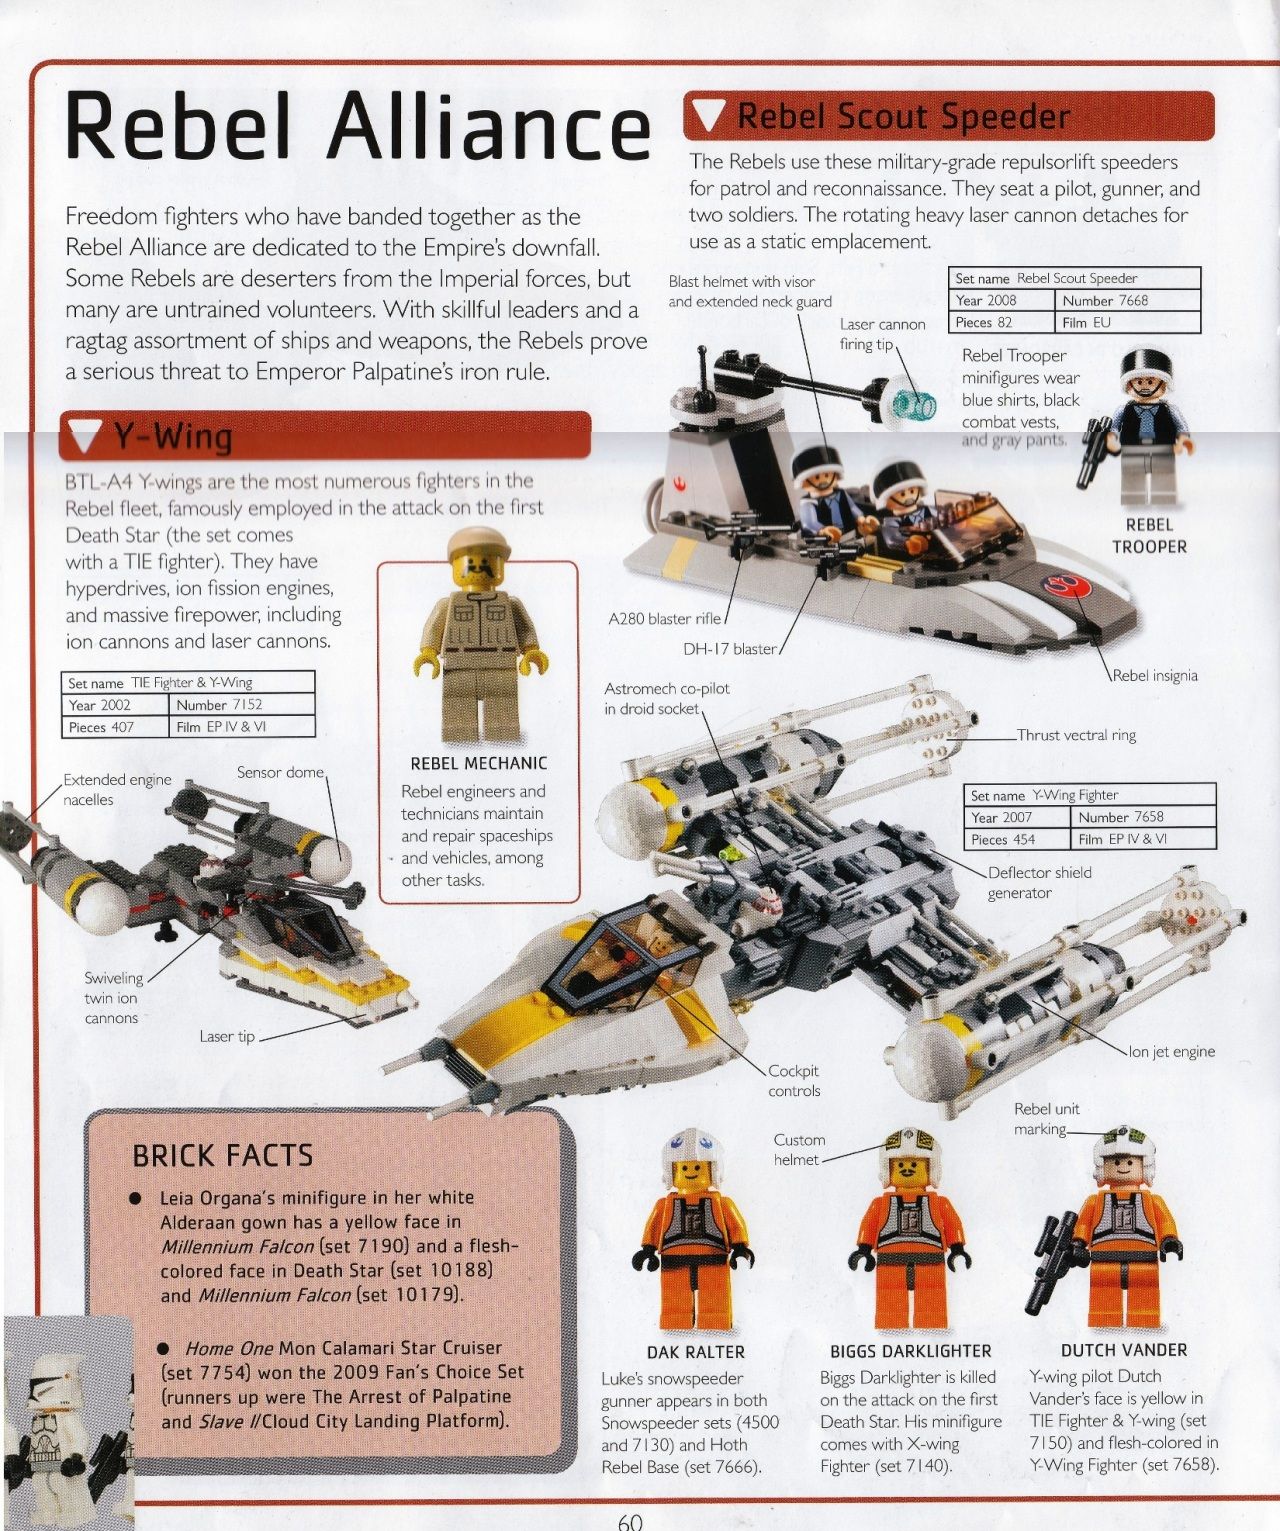 Lego Star Wars The Visual Dictionary 2009 Lego Star Wars The Visual Dictionary 2009 61